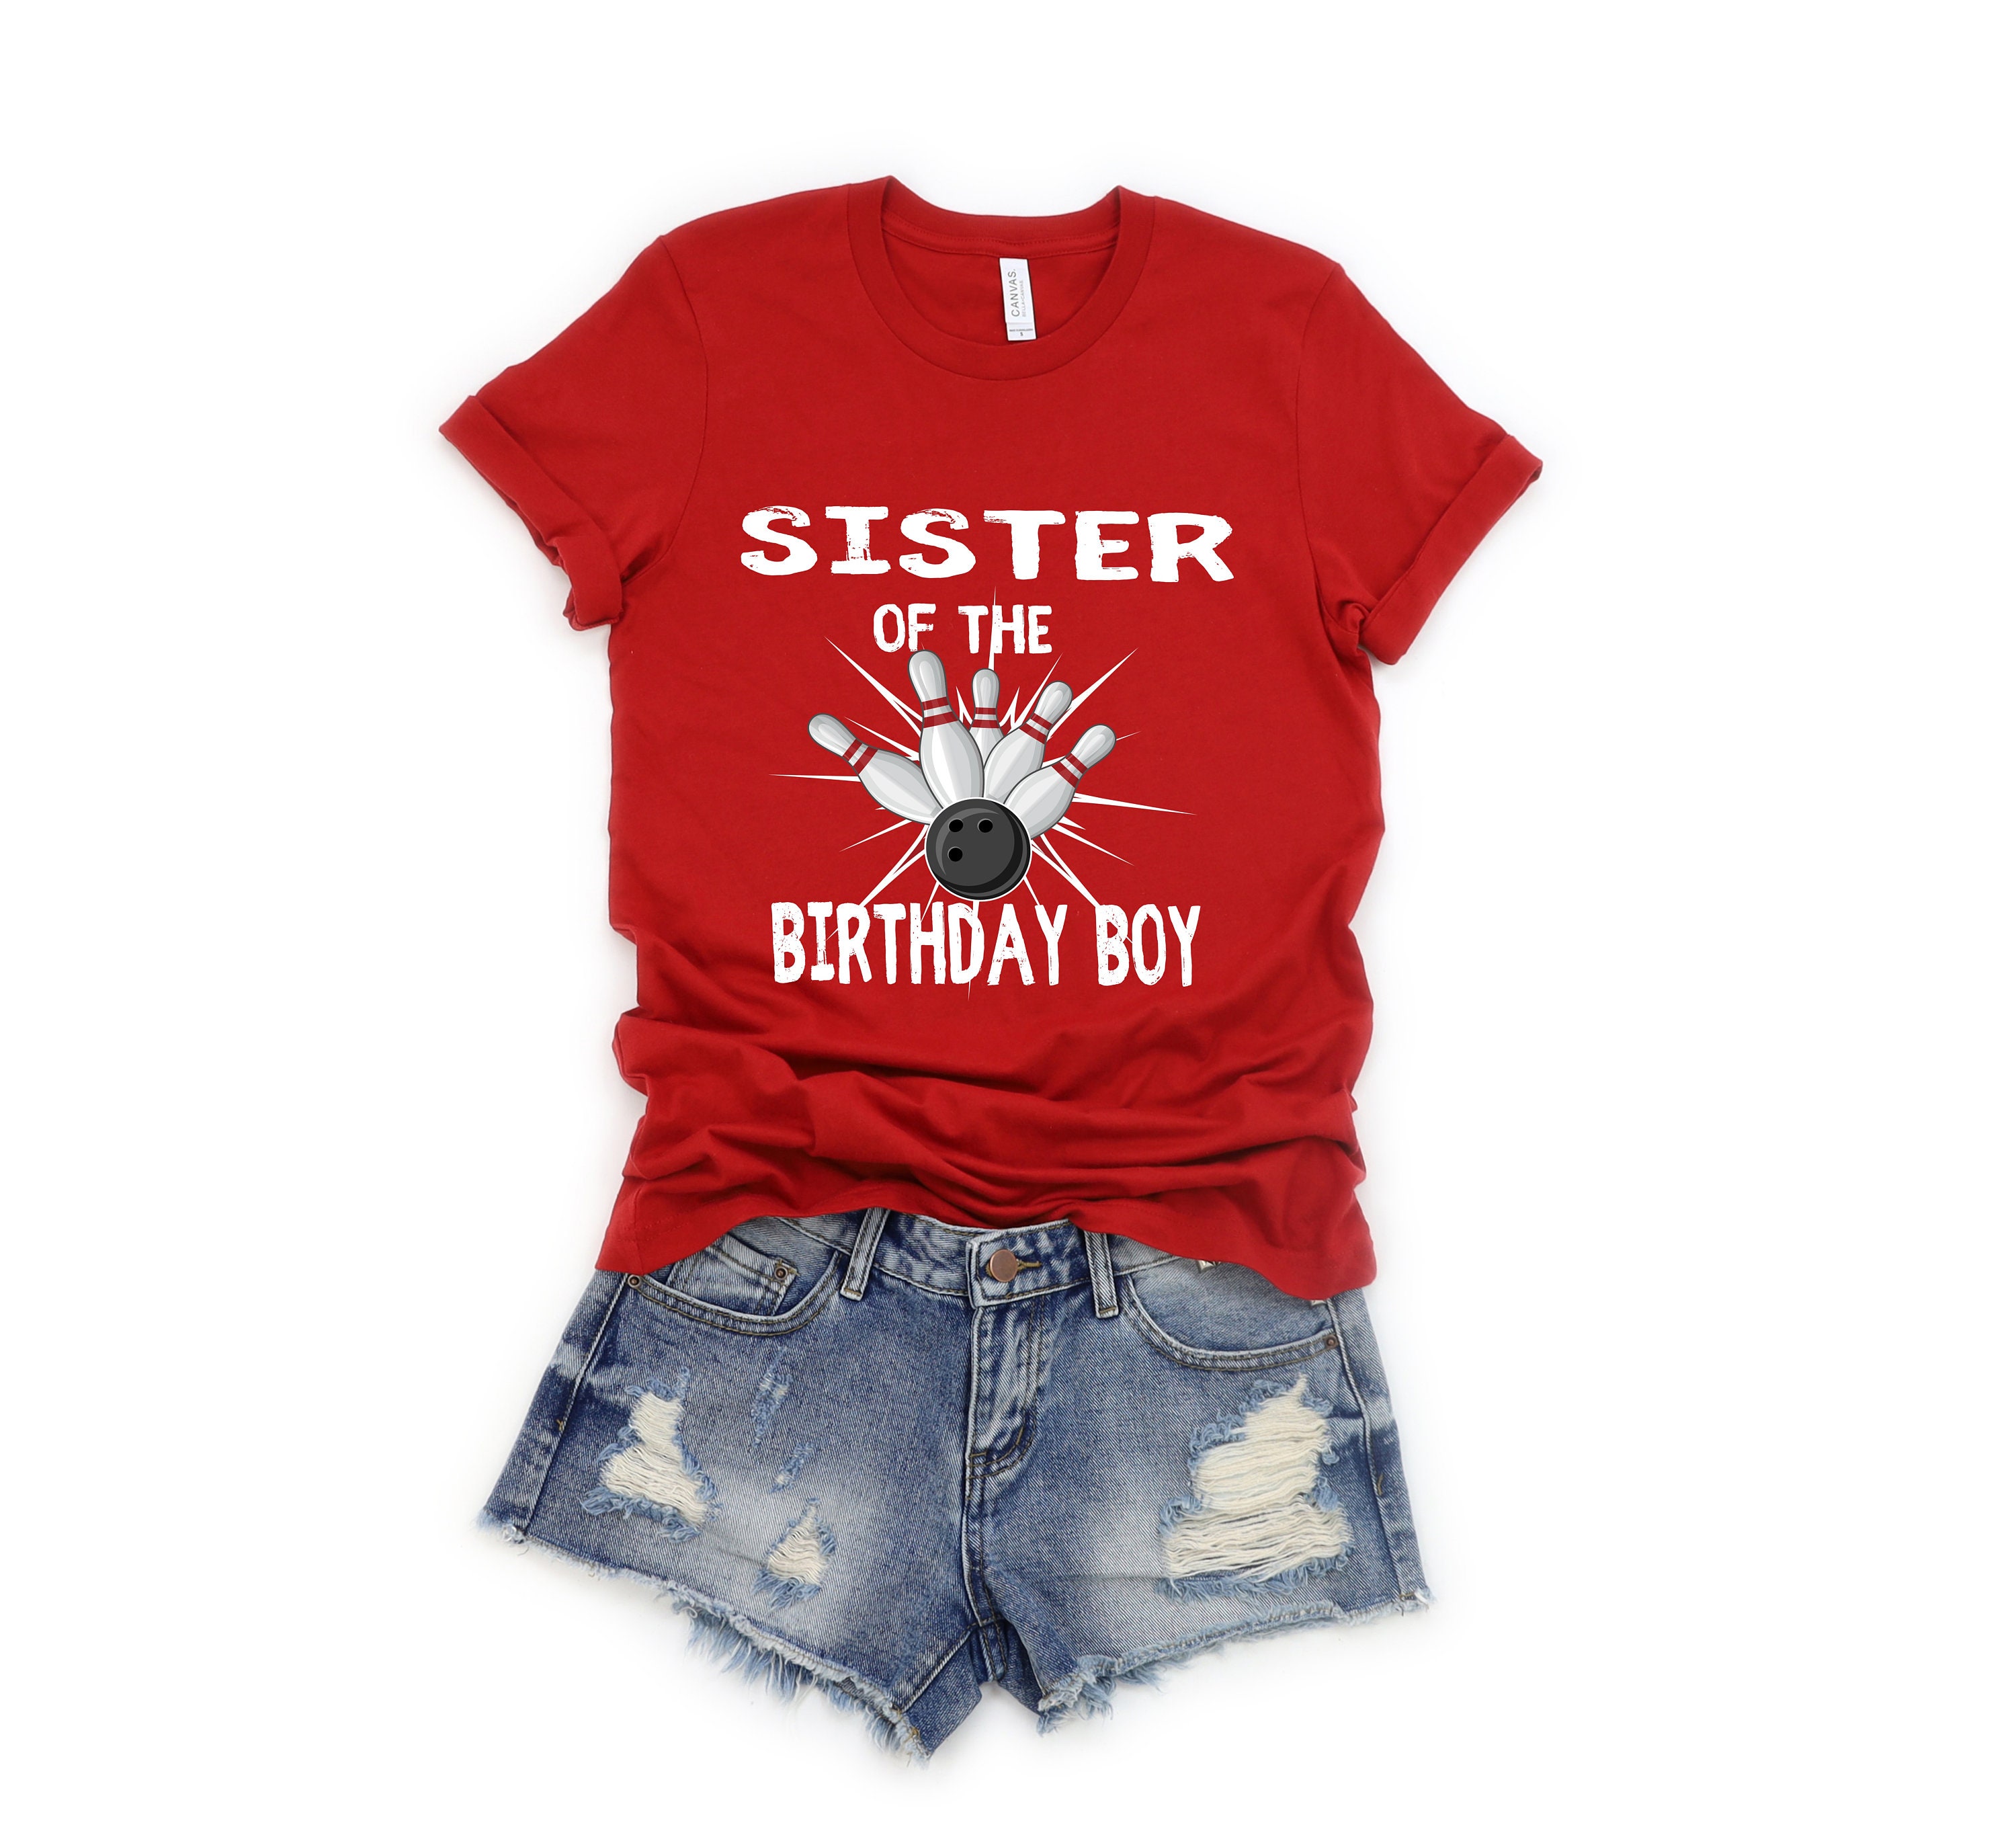 Personalized Bowling Birthday Boy Tshirt, Bowling Birthday shirt, Birthday Boy T-shirt, Bowling shirt, Birthday Bowling Party shirt